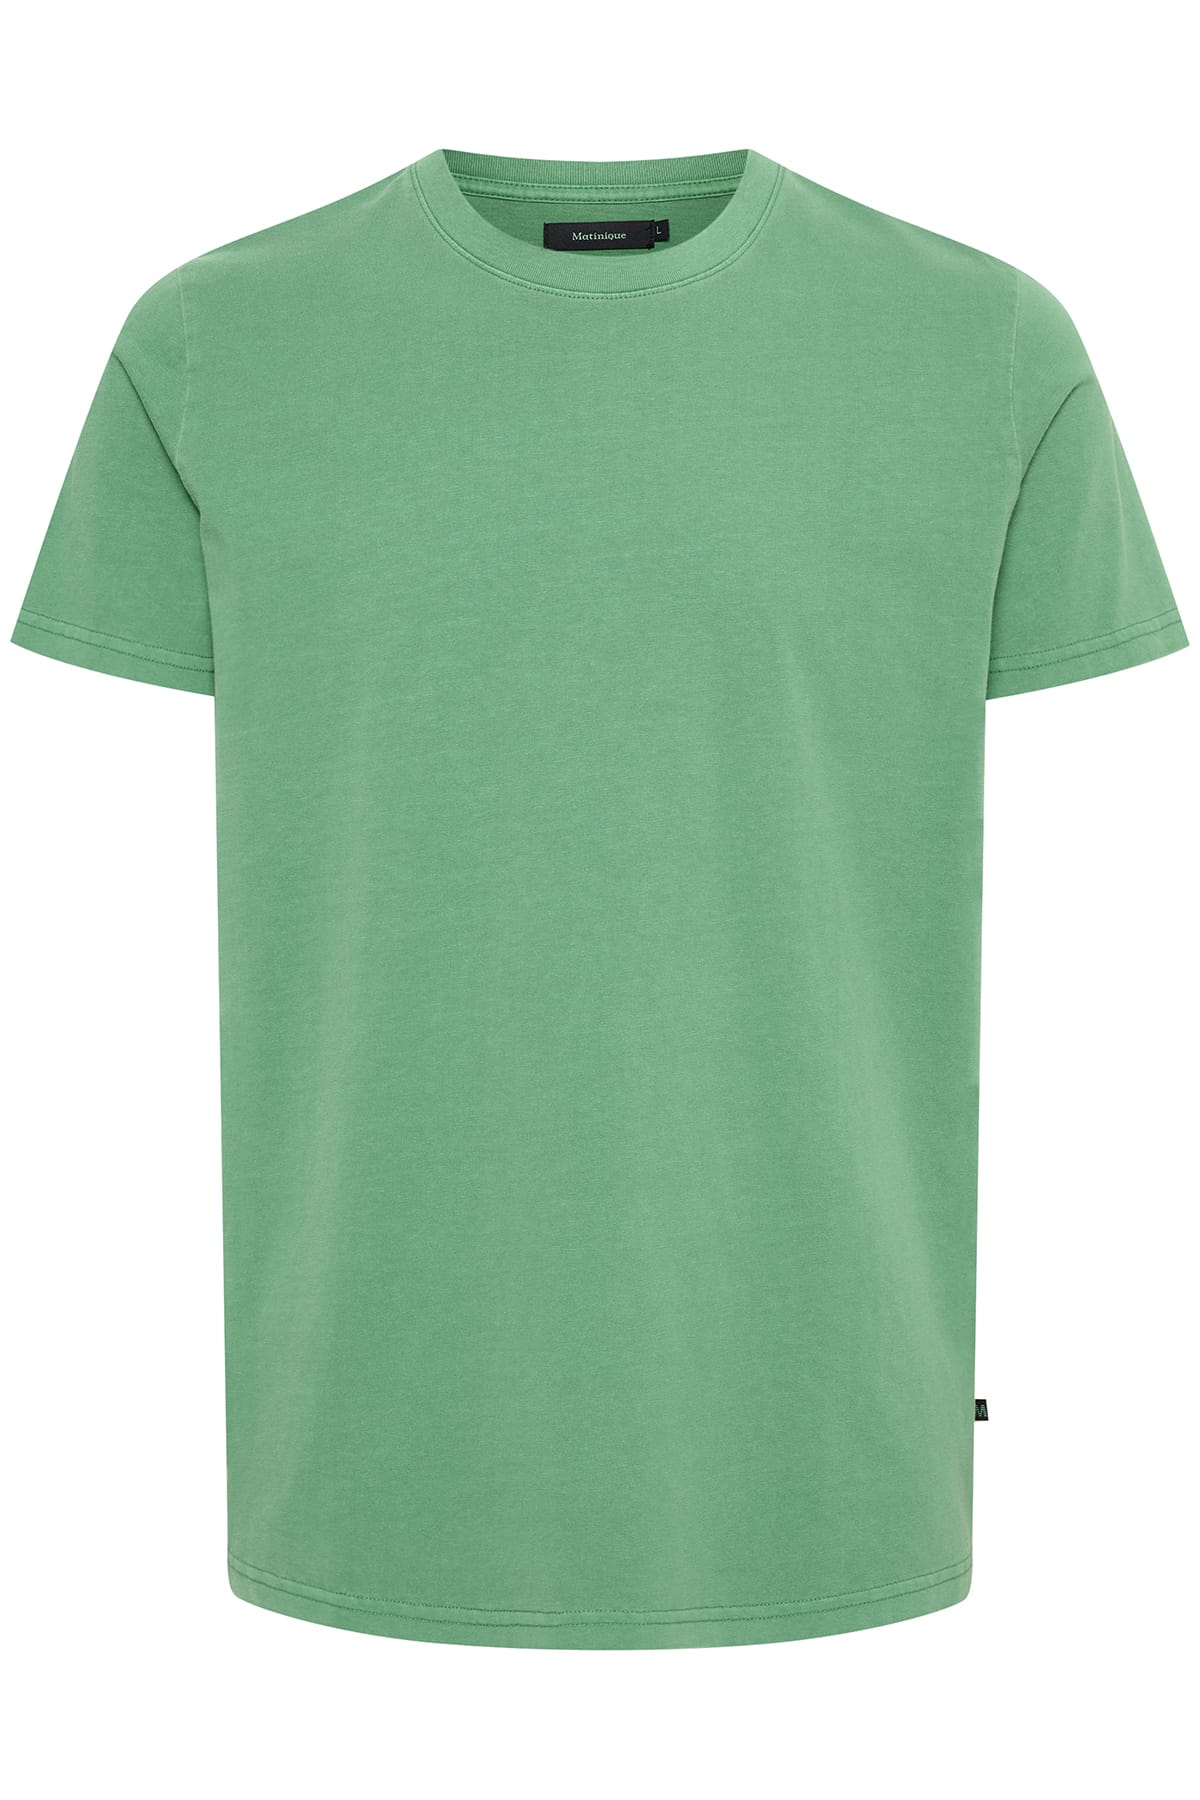 T-Shirt MAjeremy Pine Green T-Shirt Matinique 